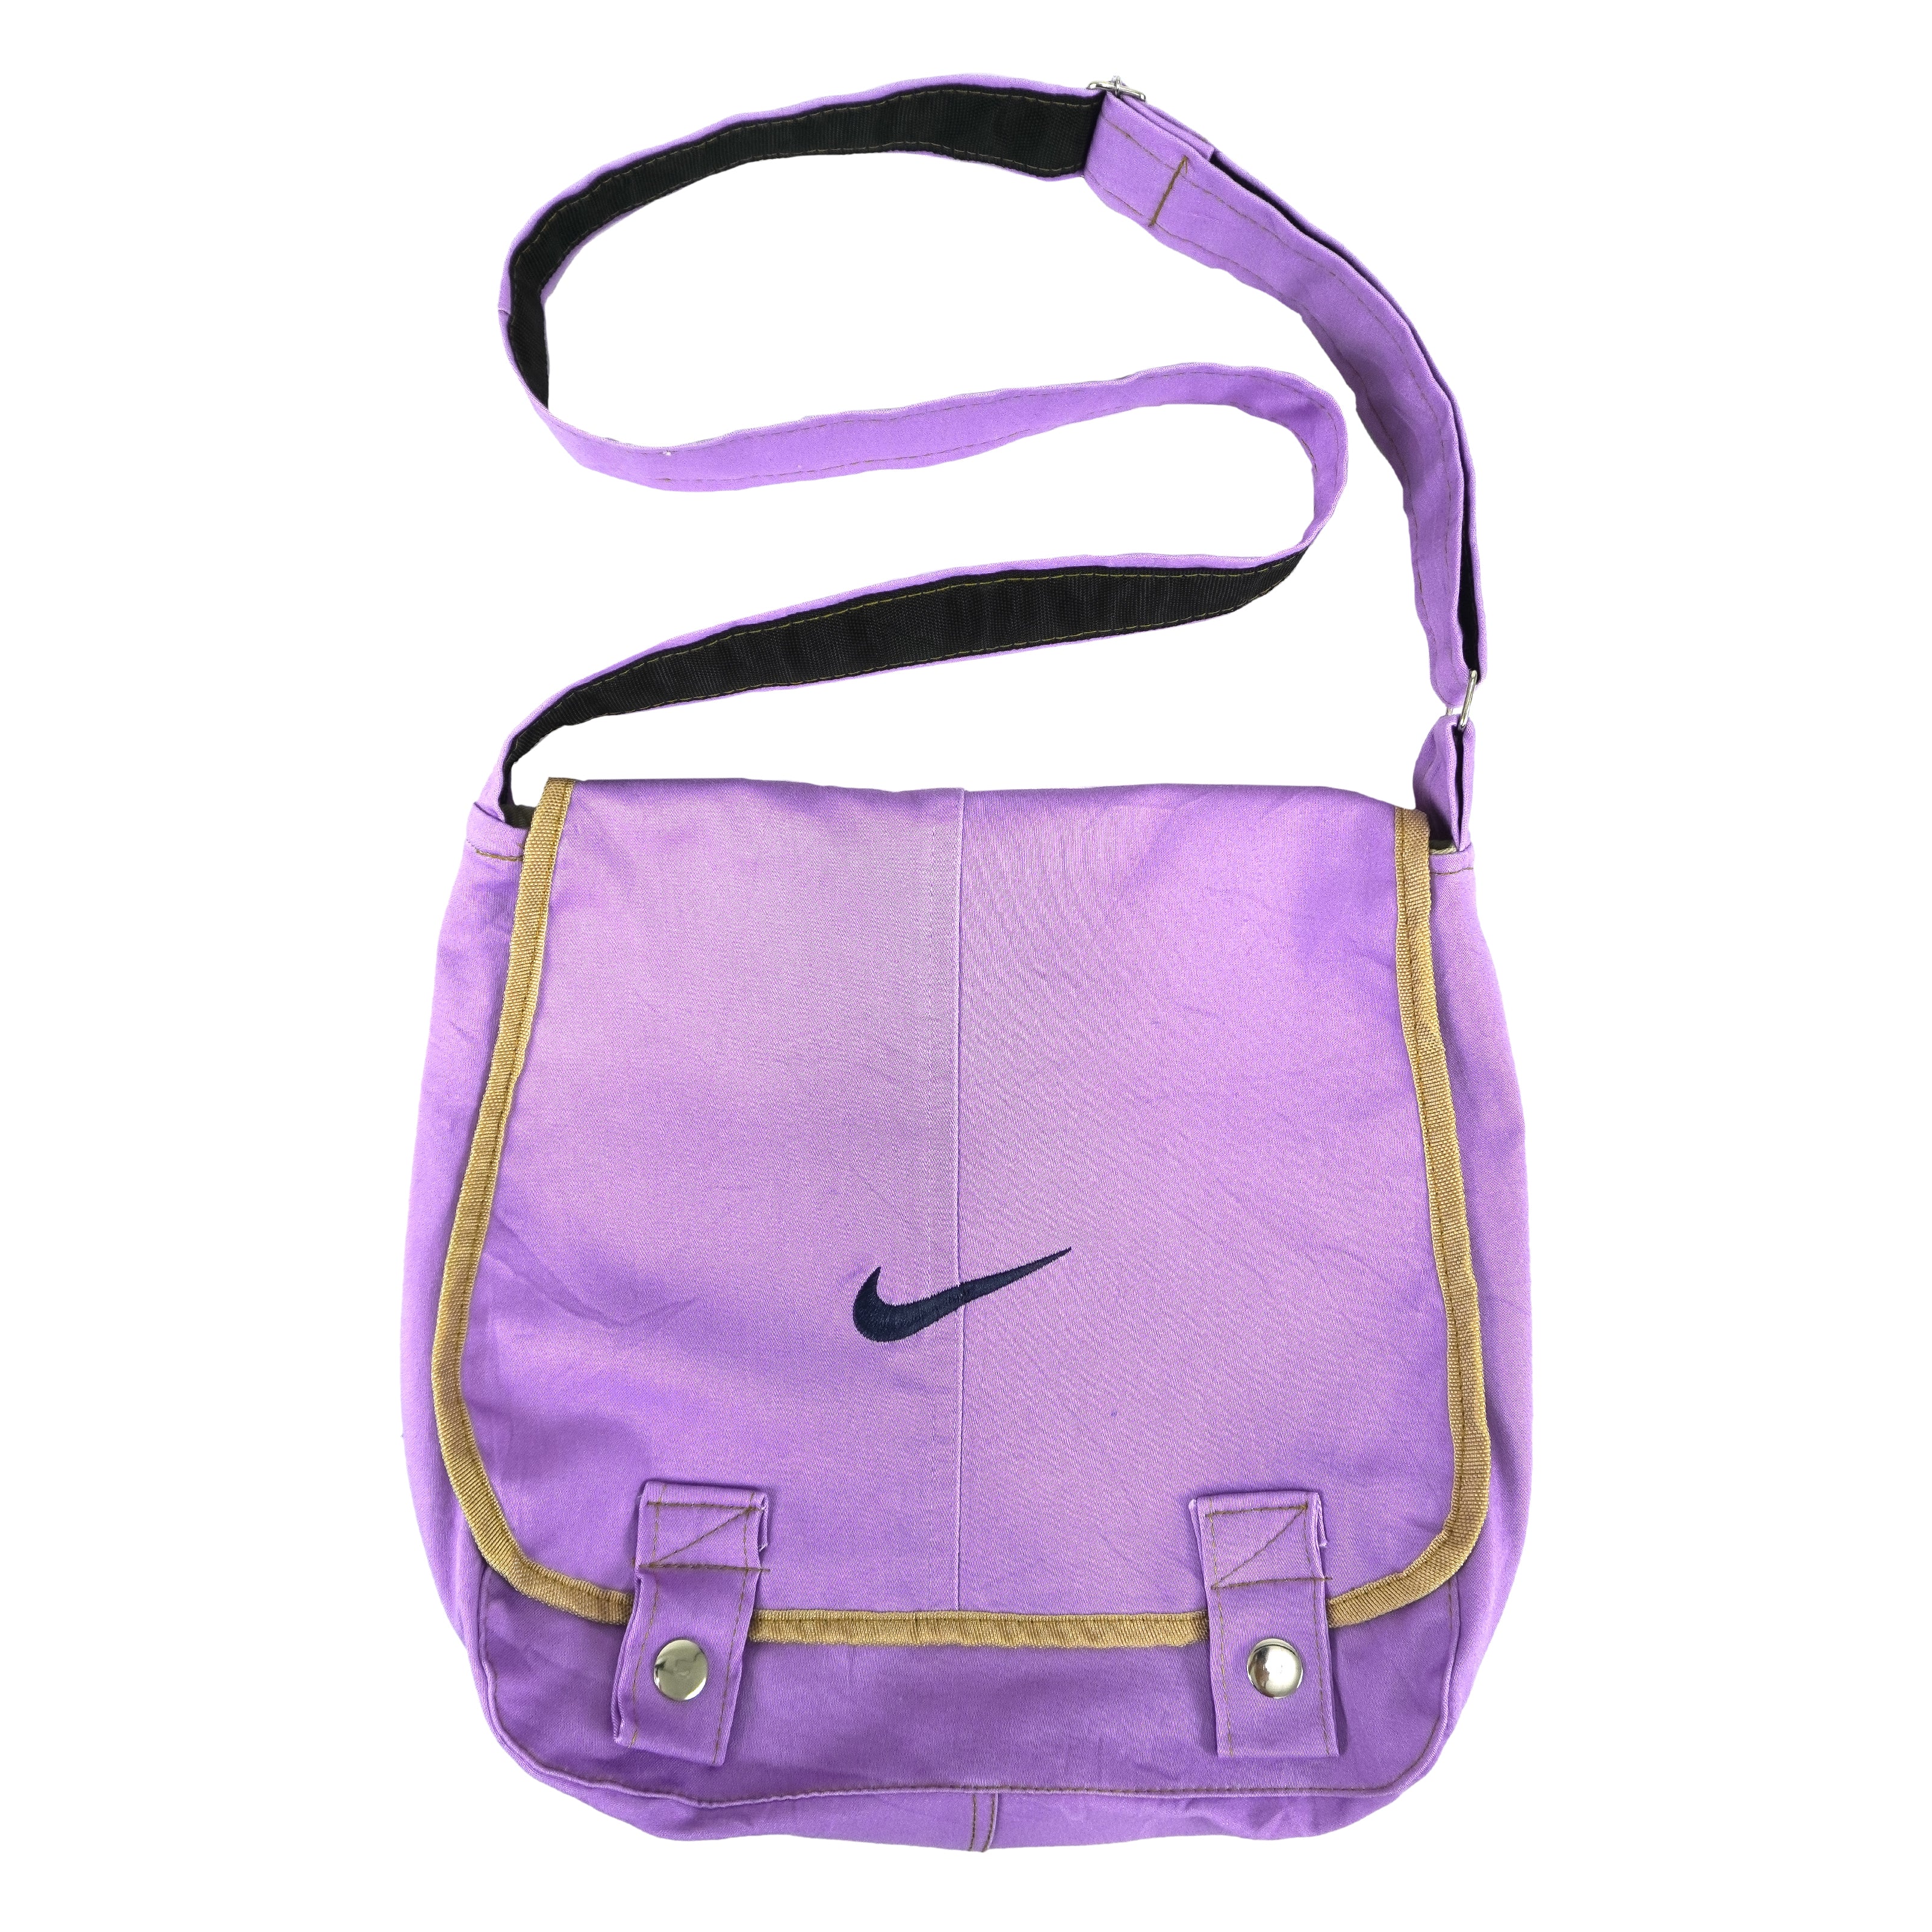 Reworked Nike Tote Bag